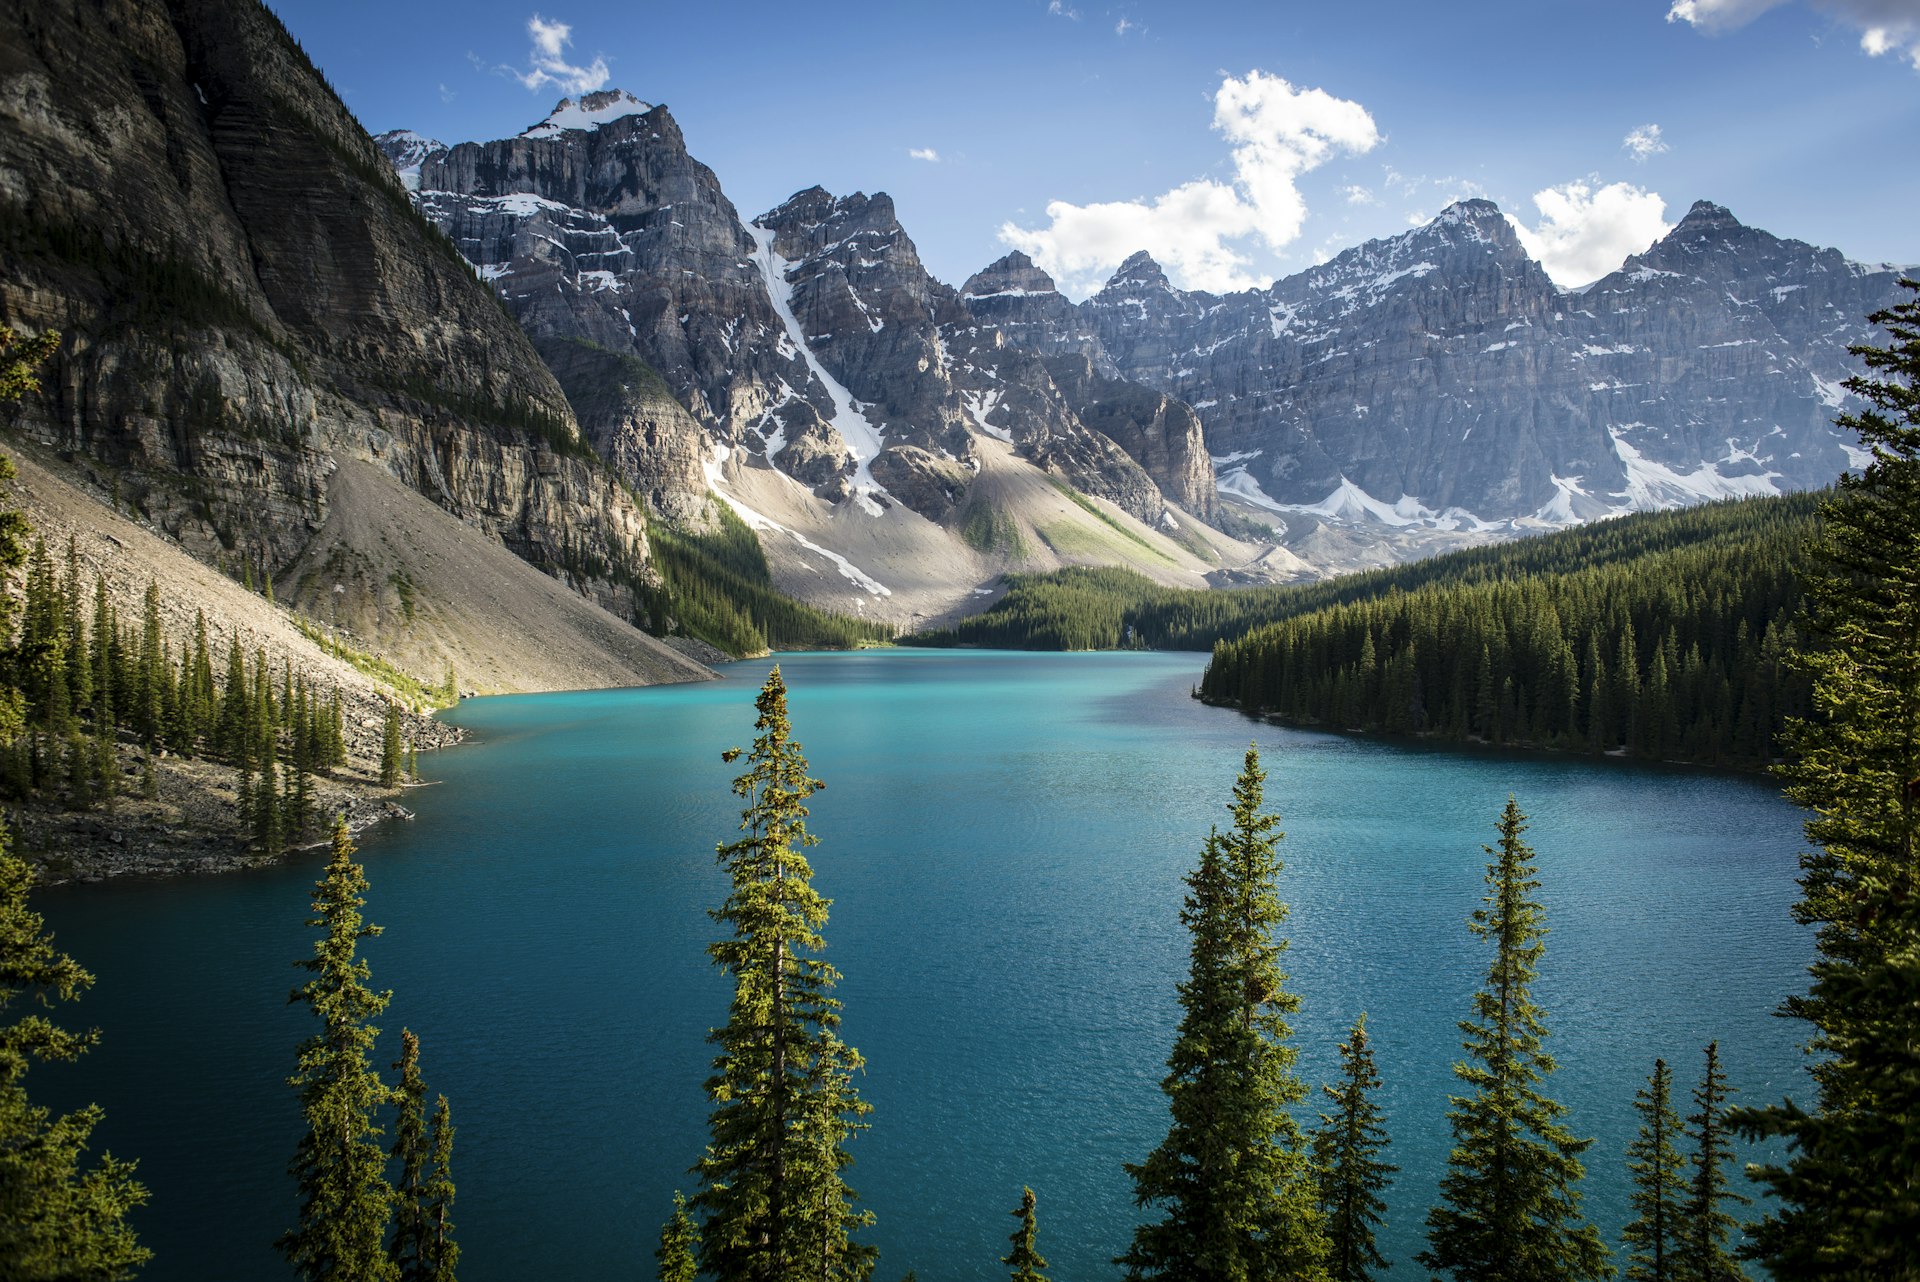 500px Photo ID: 76827871 - Moraine Lake, Banff National Park, Alberta, Canada